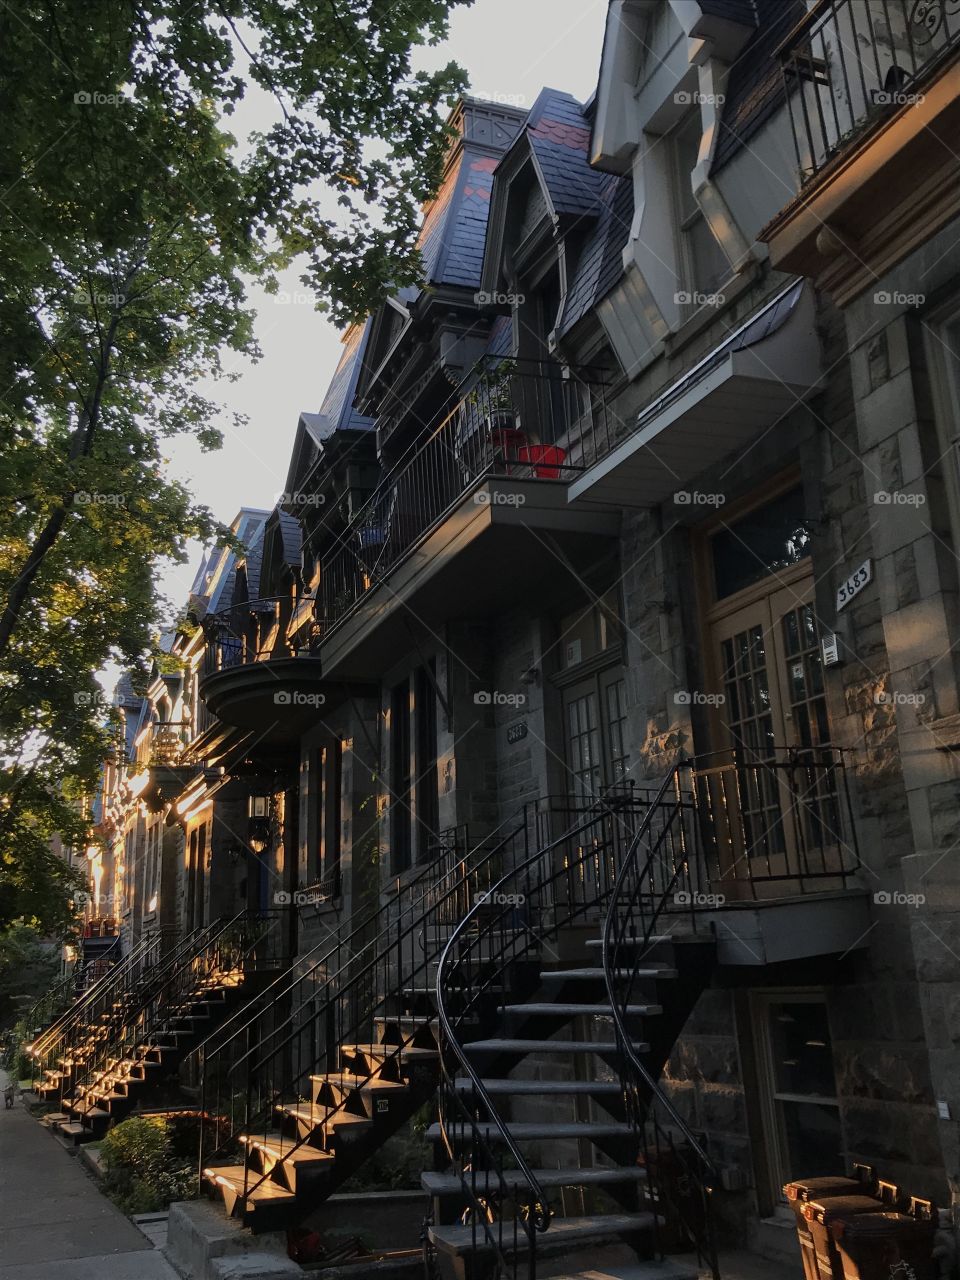 Victorian houses in the Plateau neighborhood of Montréal, Canada